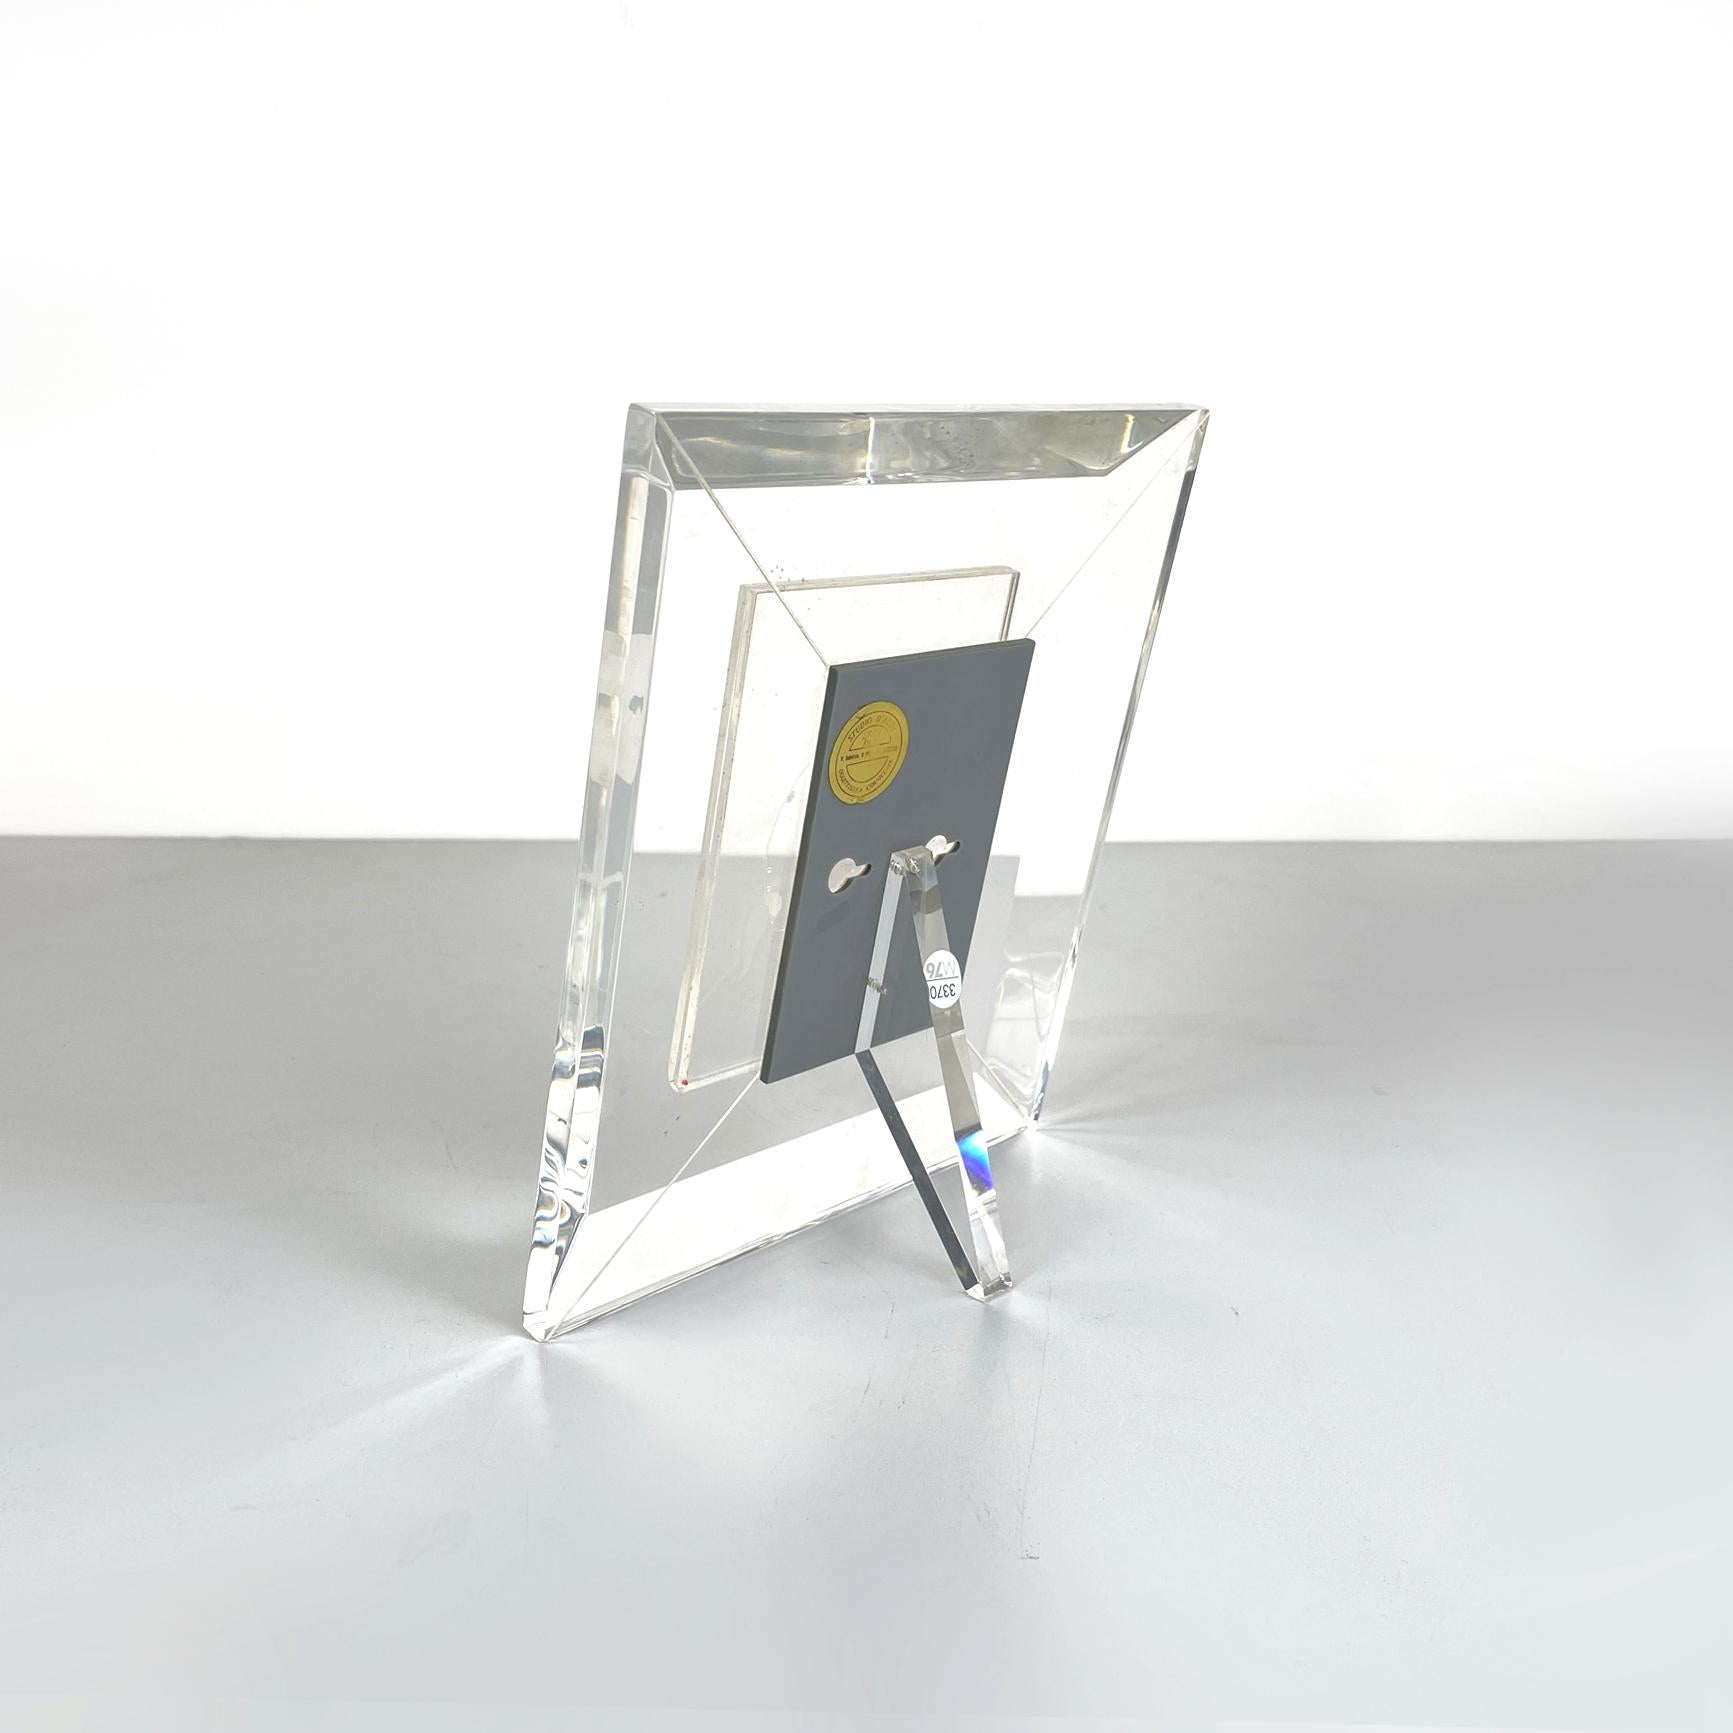 Late 20th Century Italian Modern Table Photo Frame in Transparent Plexiglass, 1970s